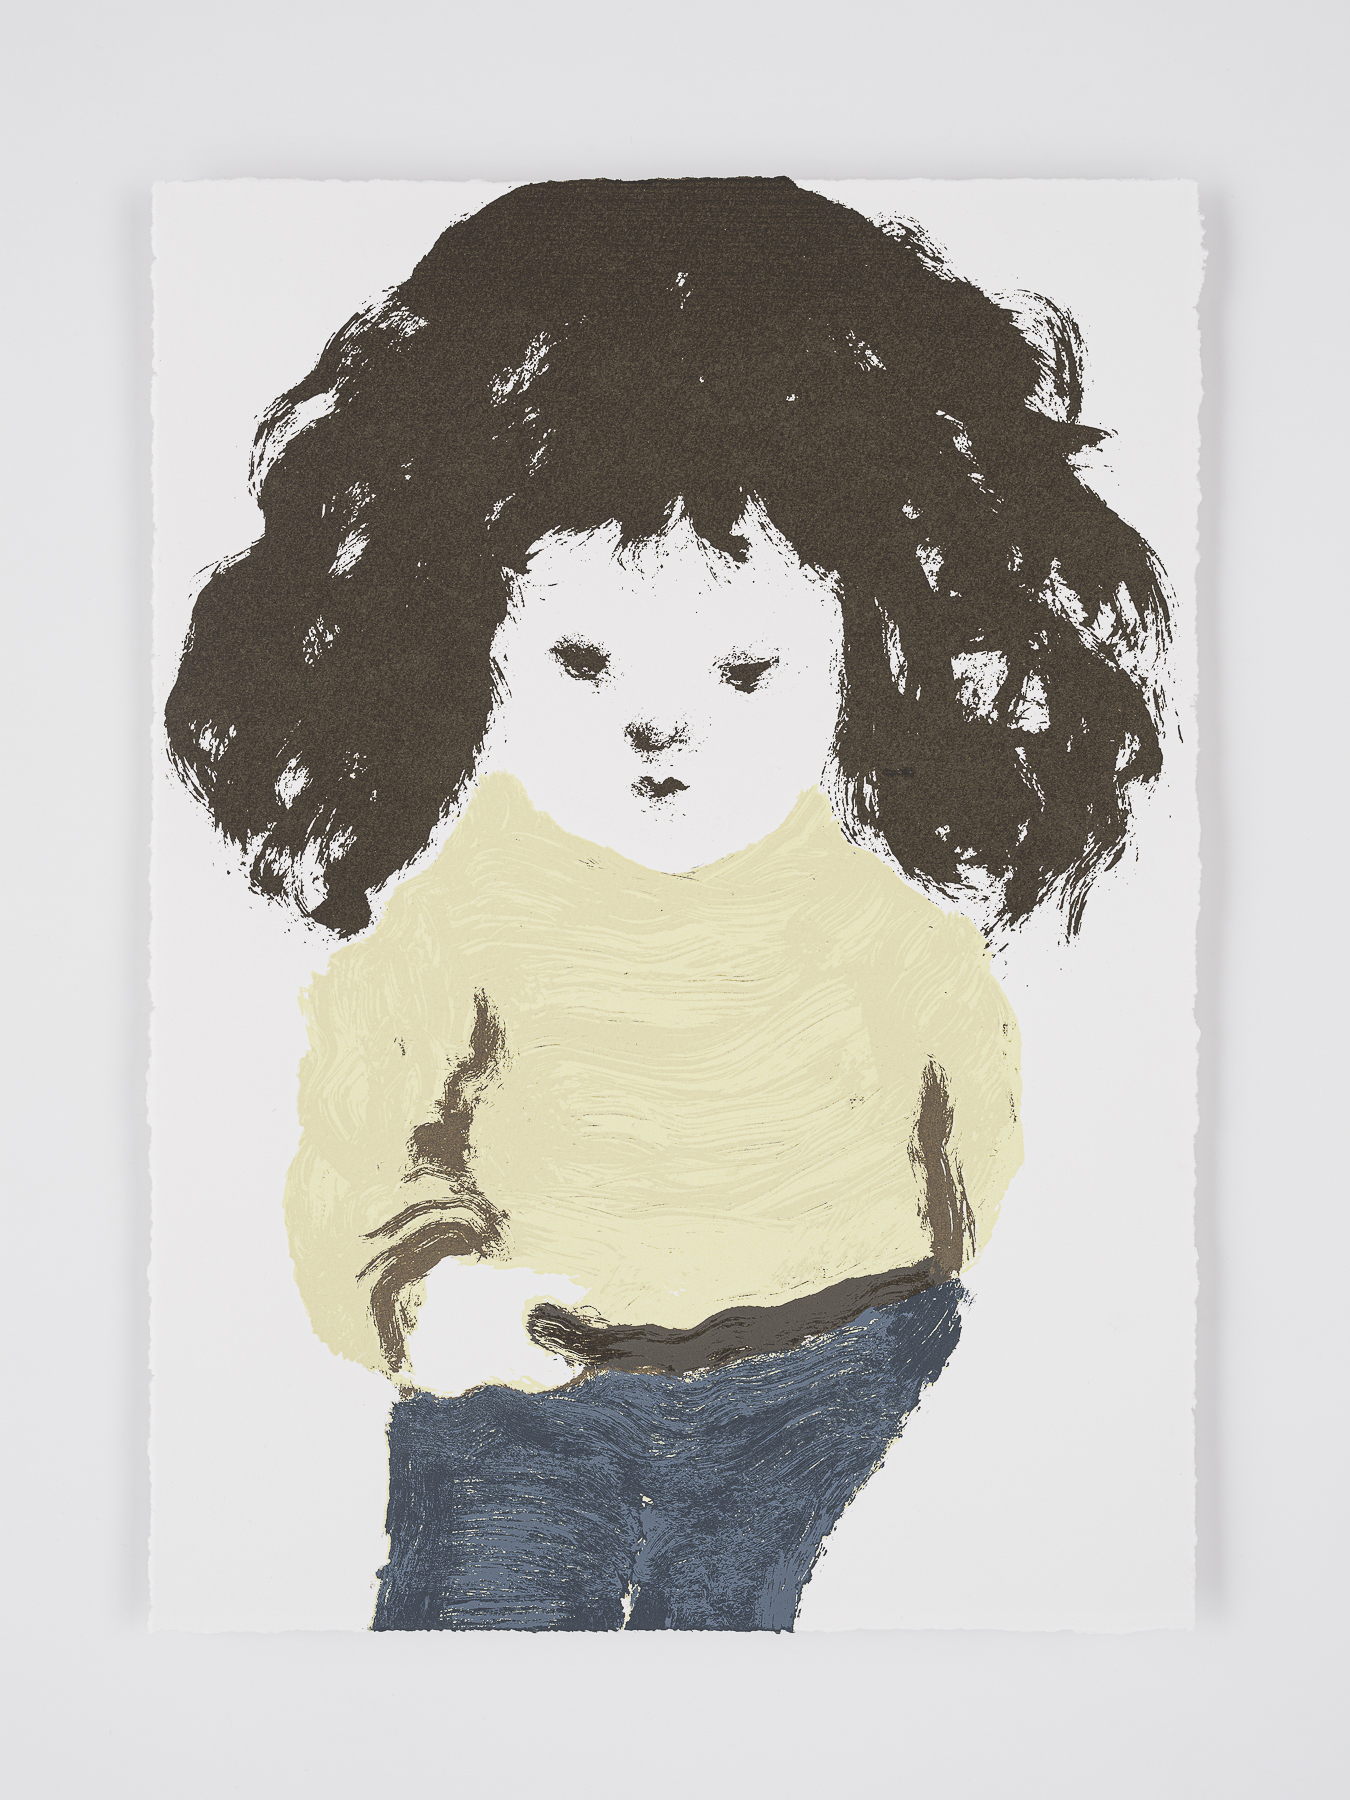 Sanya Kantarovsky - Little Vera, 2022. 15 3/8 x 11 inches (paper size) 6-color